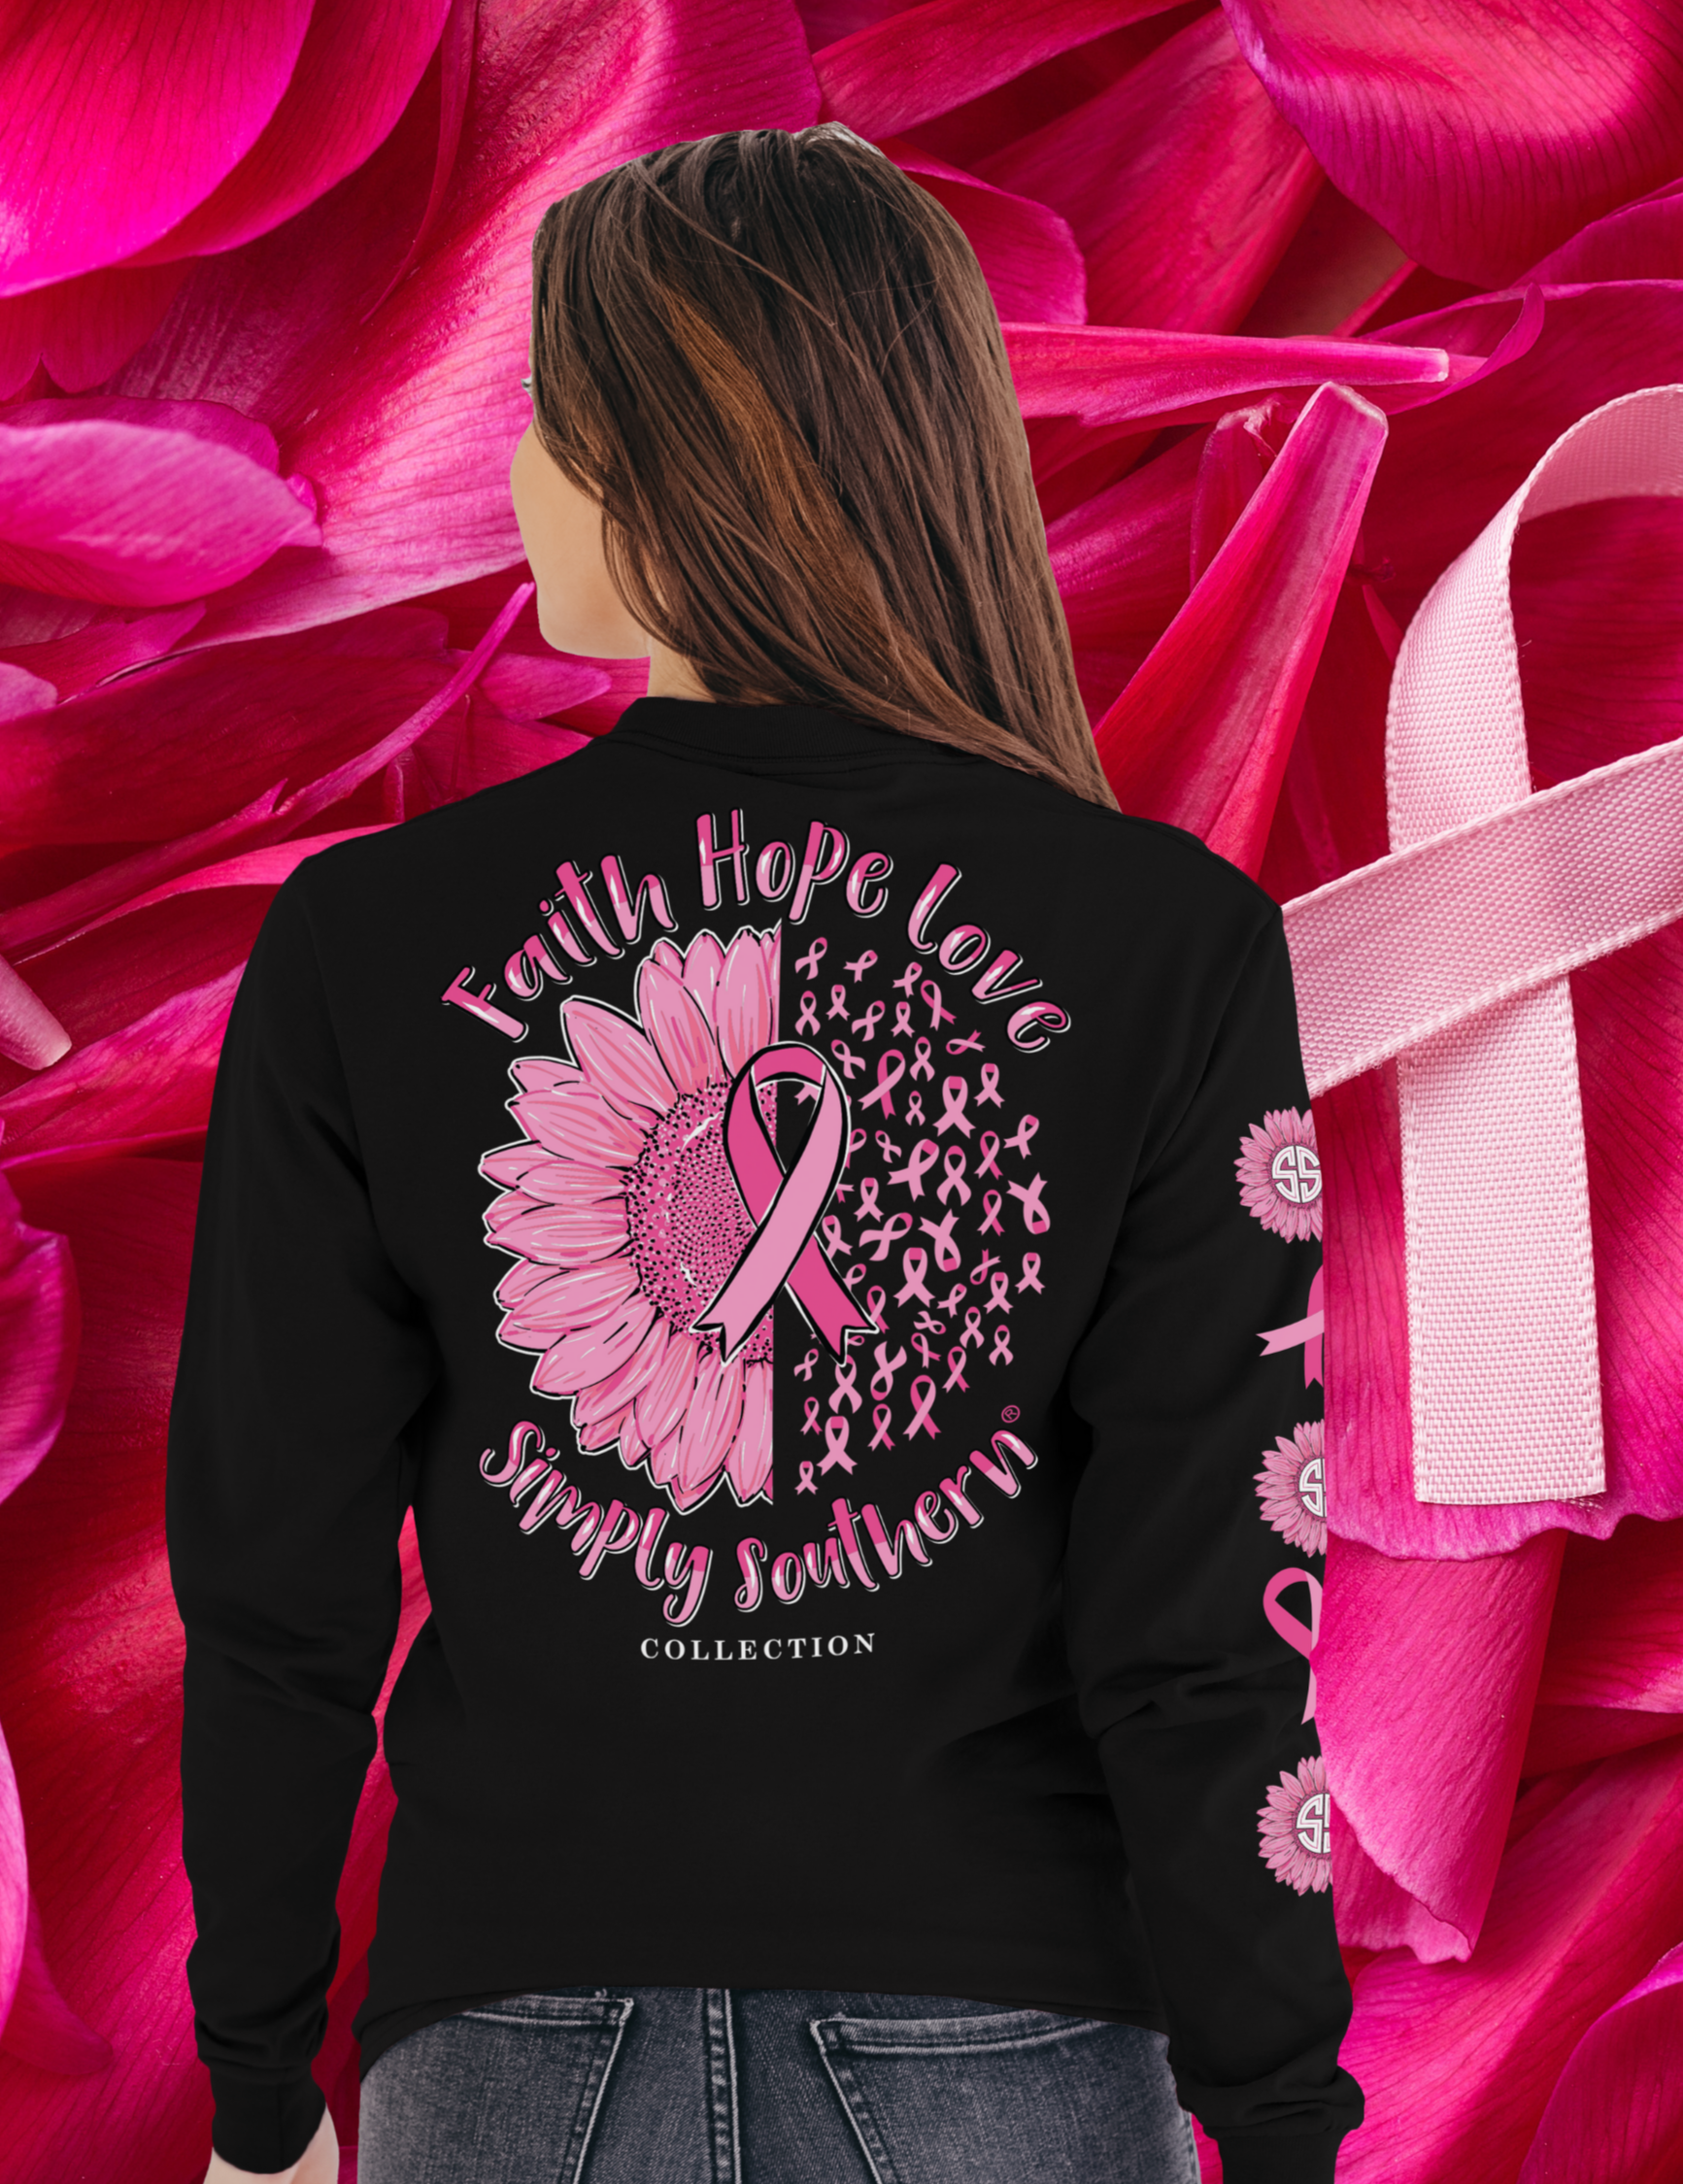 'Faith, Hope, Love' Long Sleeve Breast Cancer Awareness Tee by Simply Southern